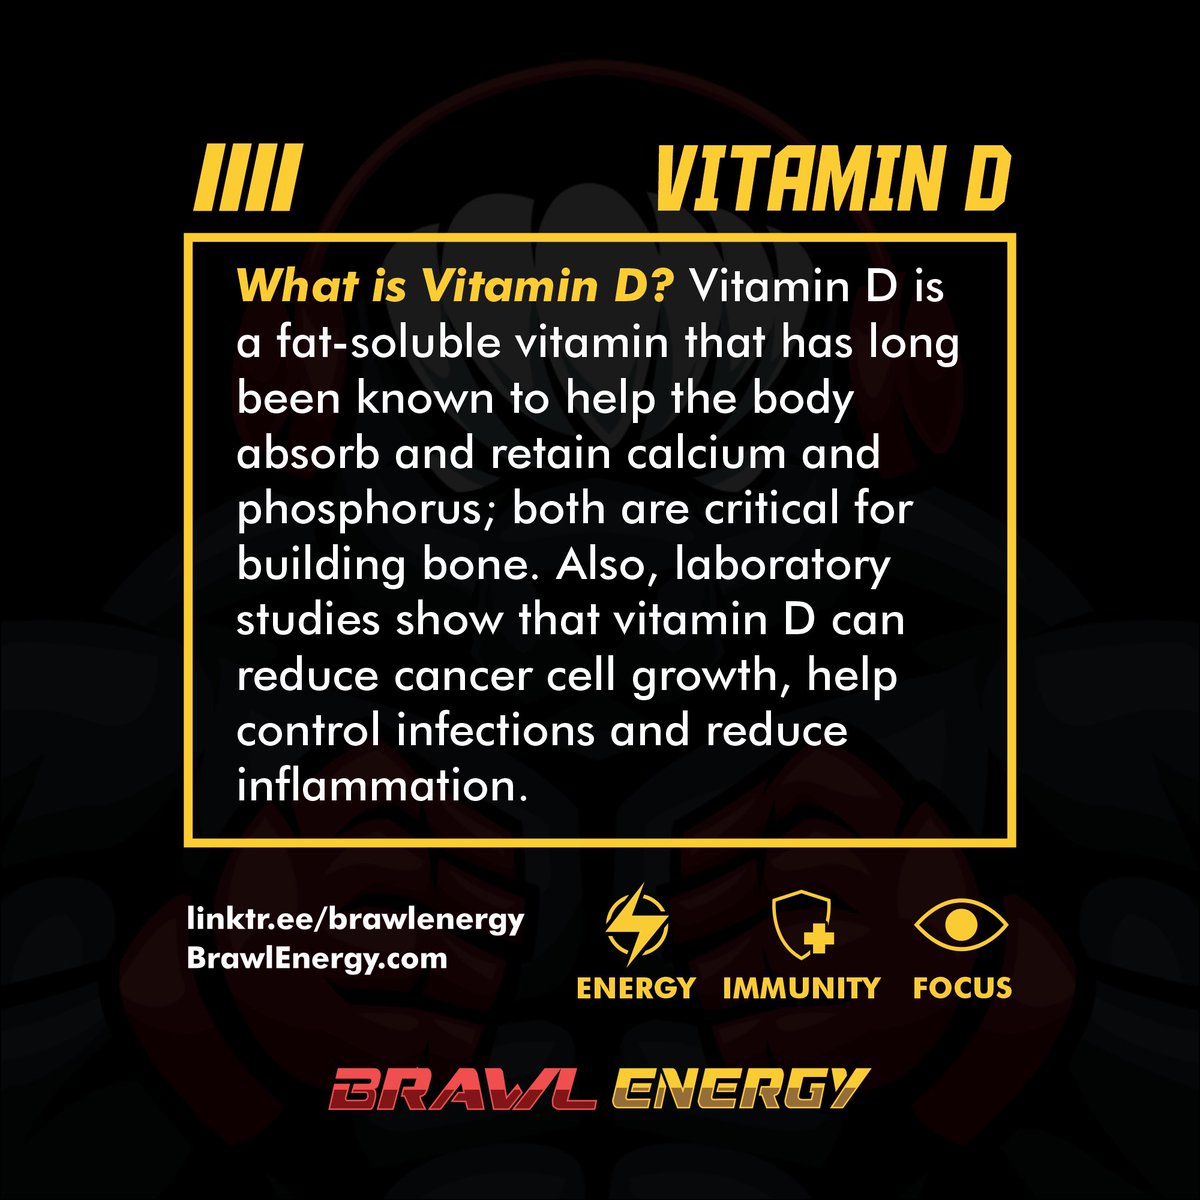 Brawl Energy ingredient education day: Vitamin D! #brawlenergy #energydrink #vitamind #vitamins #healthylifestyle